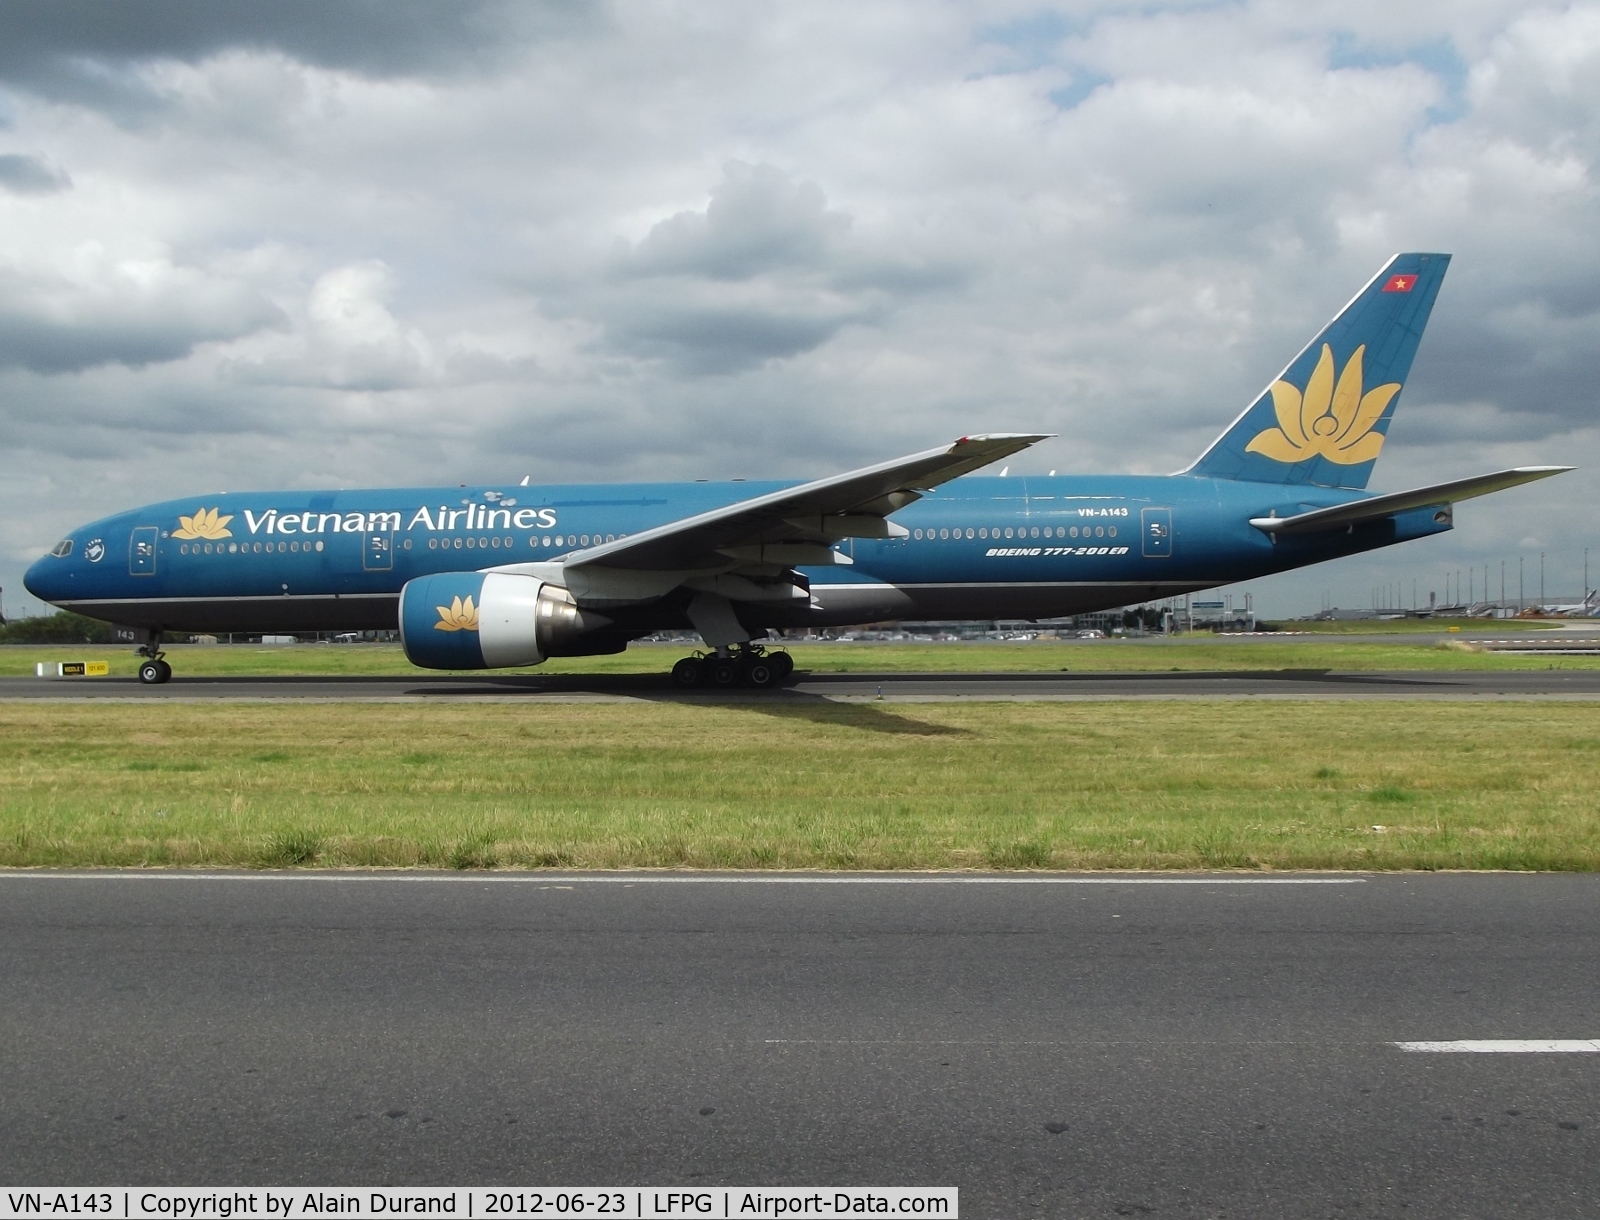 VN-A143, Boeing 777-26K/ER C/N 33502, C/N 450 was heading to runway 27L in anticipation of her return flight to Hanoi.